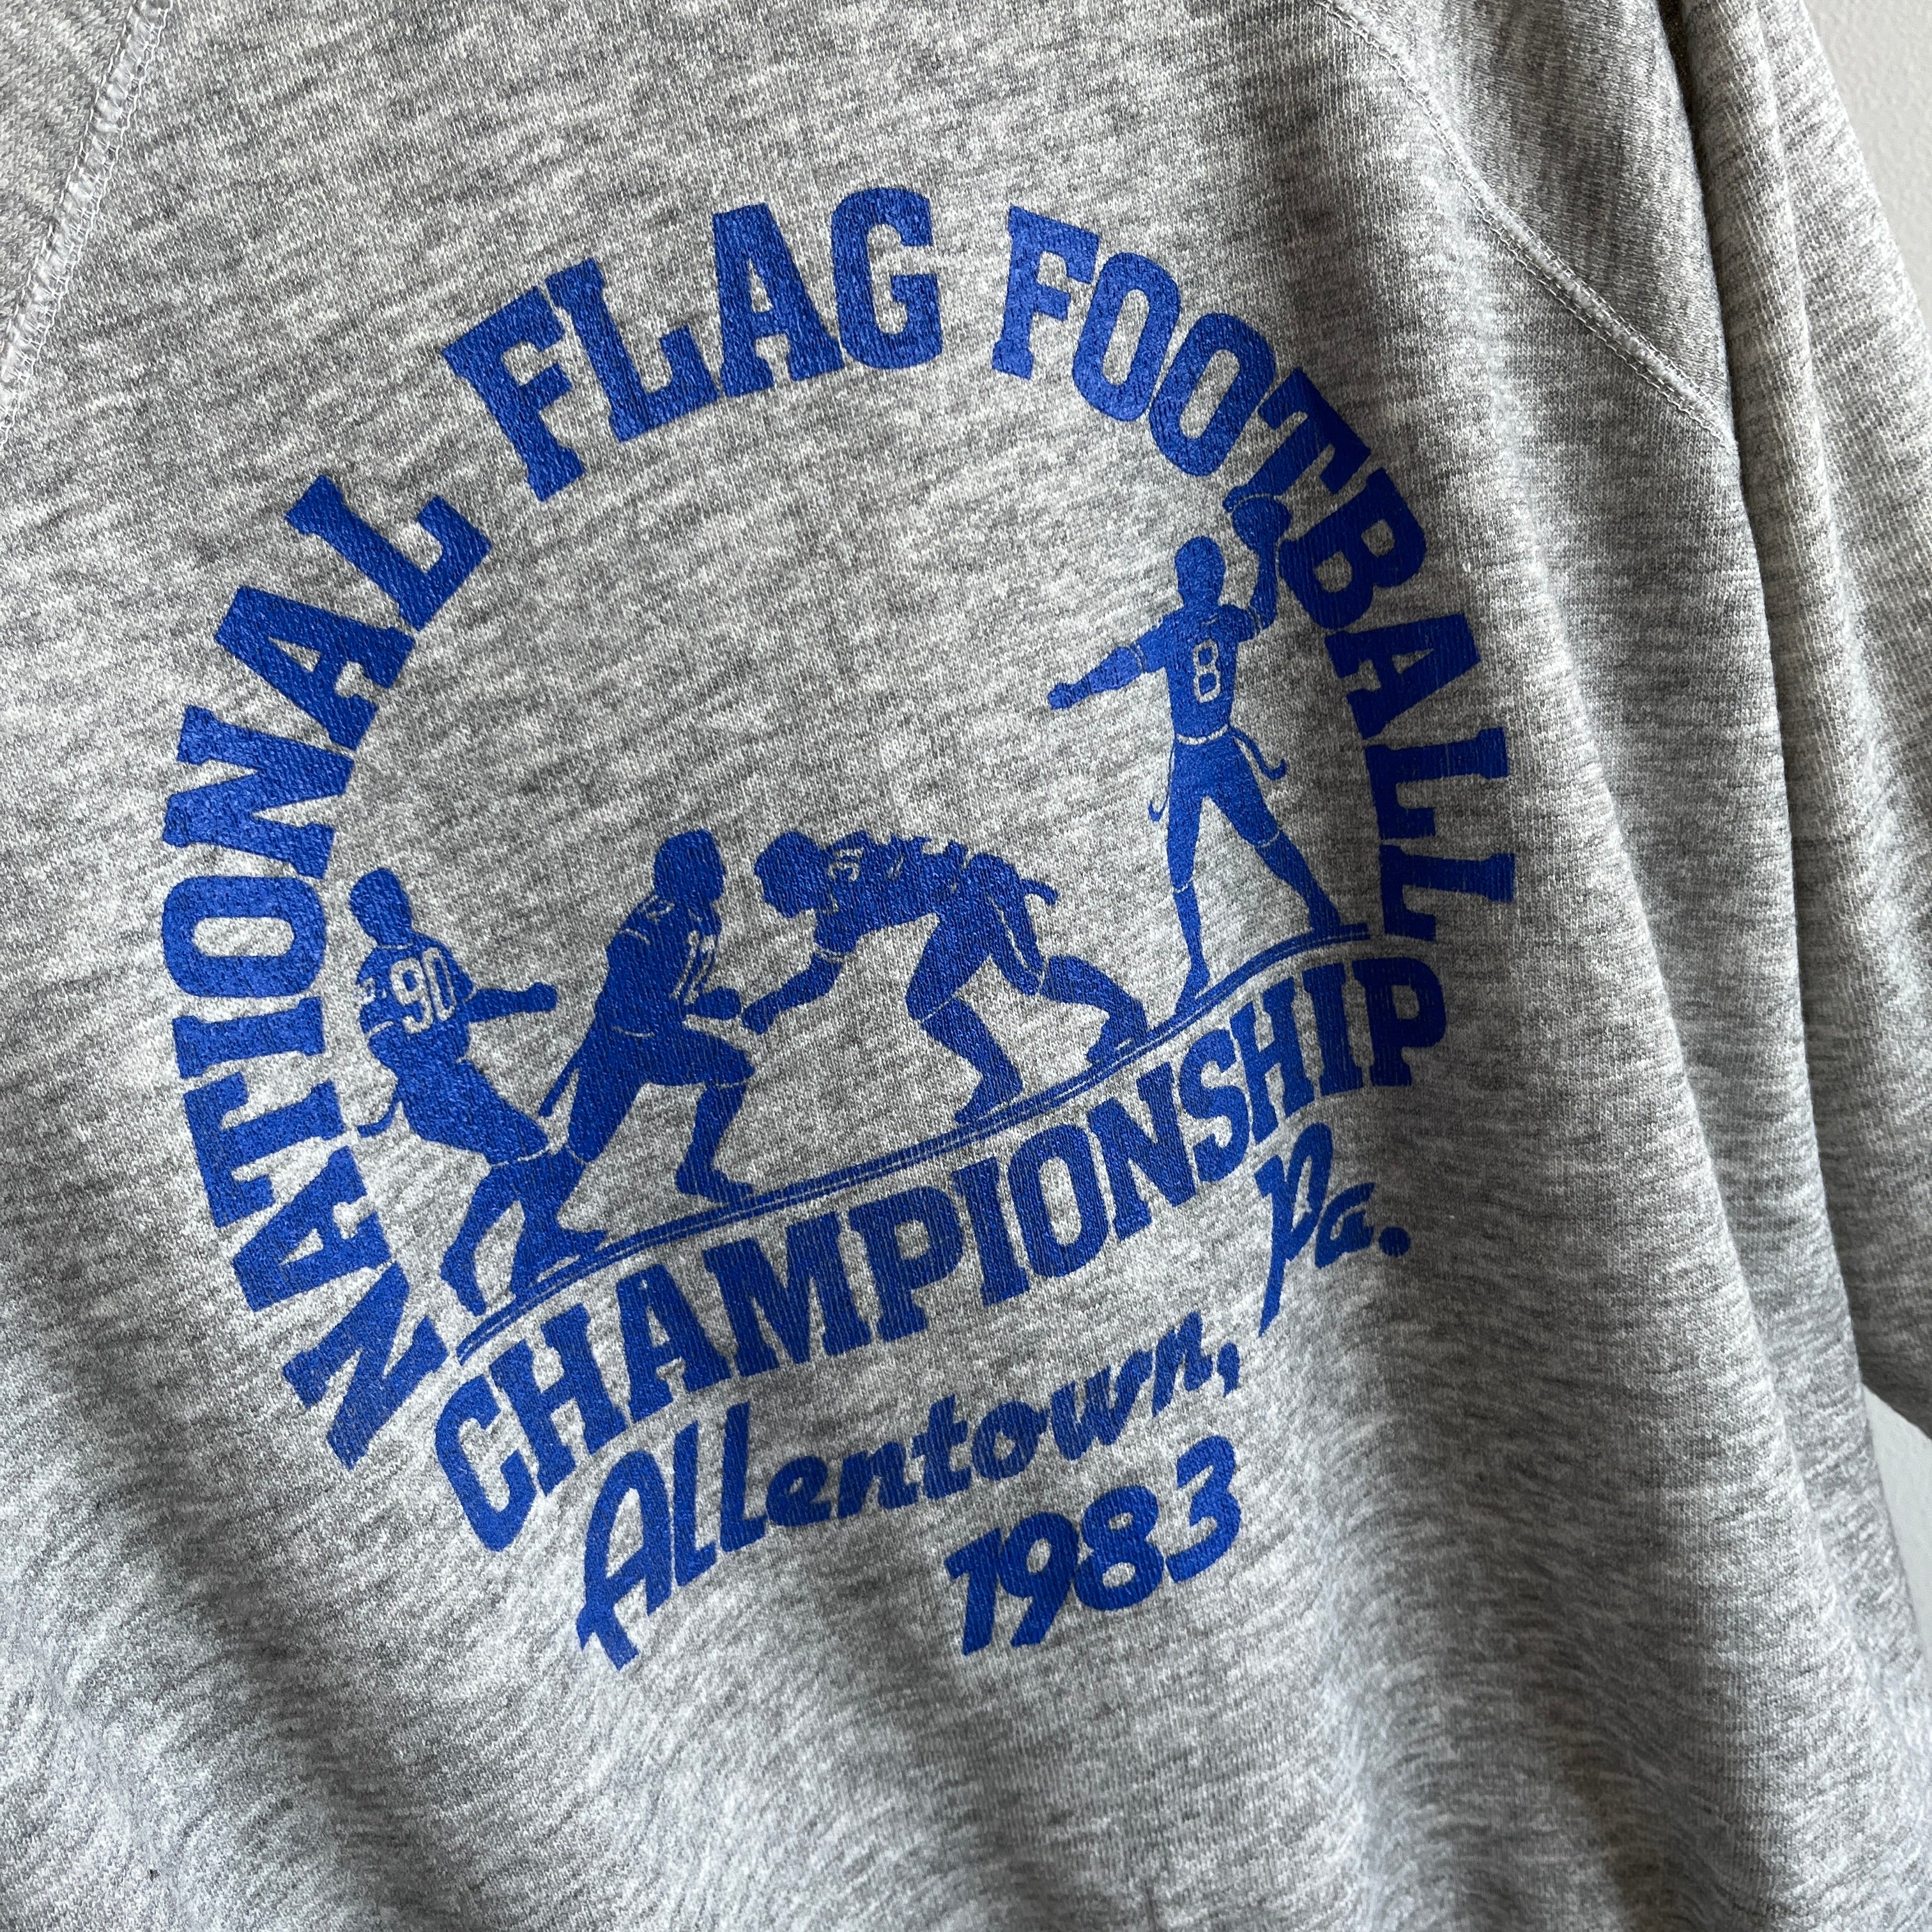 1983 Flag Football Championships Sweatshirt